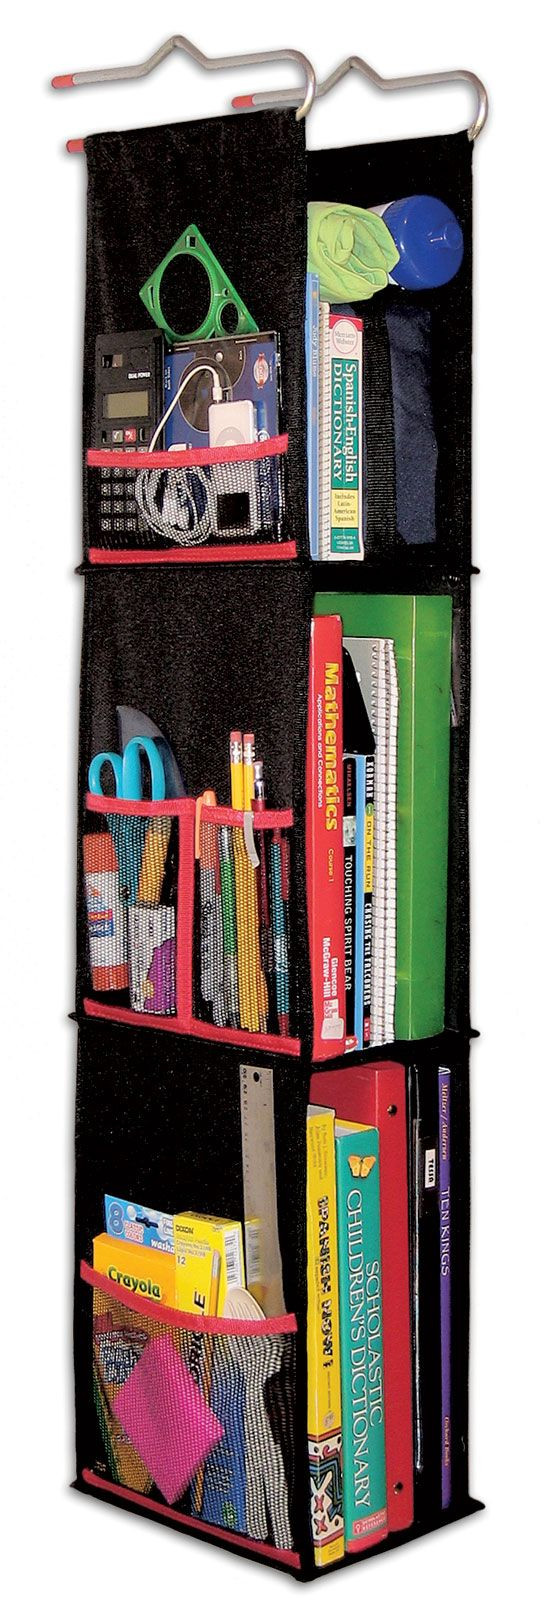 Best ideas about Locker Organizer DIY
. Save or Pin Hanging Locker Organizer 3 Shelf Fabric by LockerWorks Now.